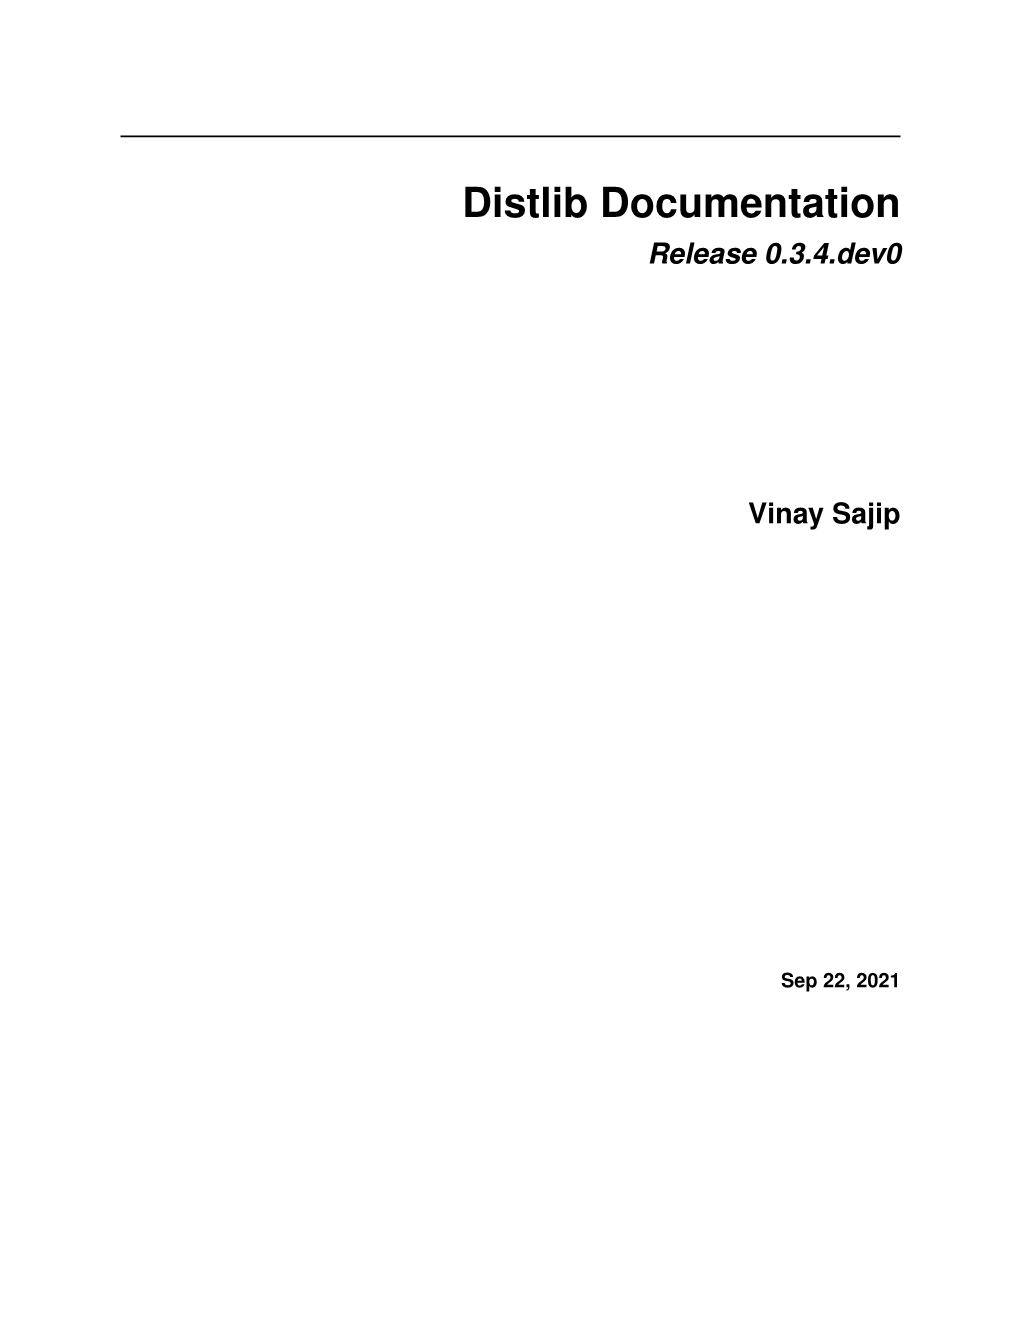 Distlib Documentation Release 0.3.3.Dev0 Vinay Sajip